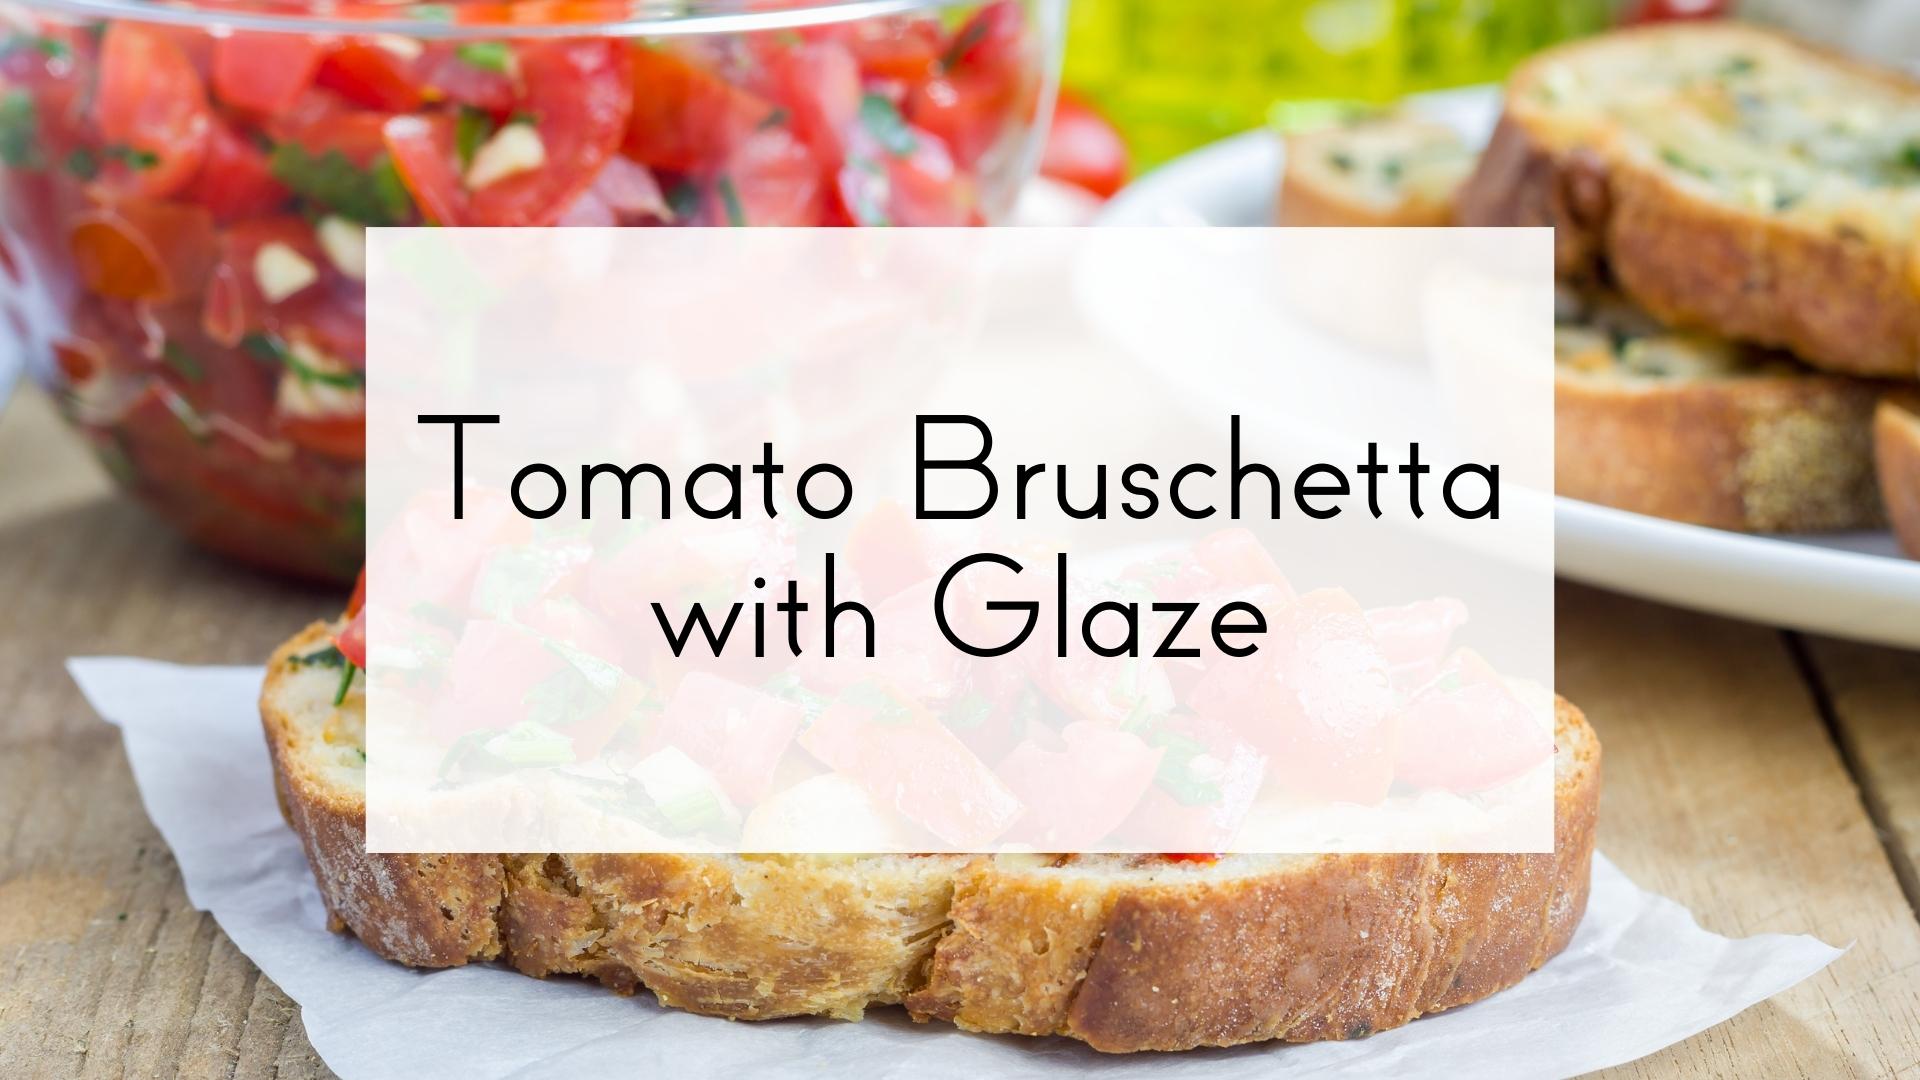 Tomato Bruschetta with Glaze